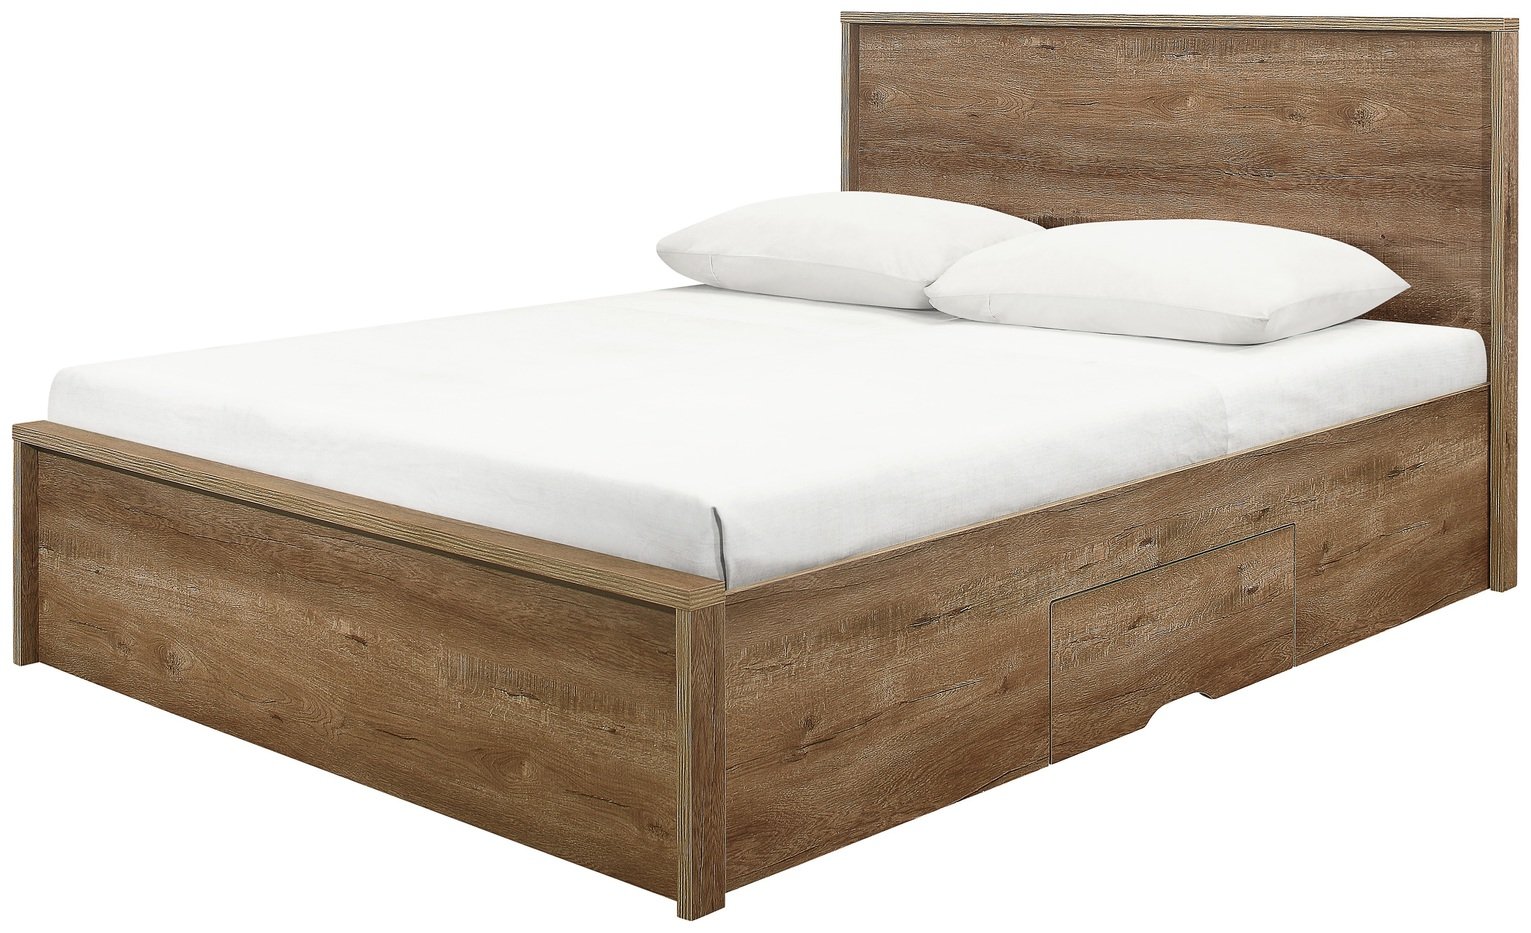 Birlea Stockwell Small Double Rustic Wooden Bed Frame - Oak